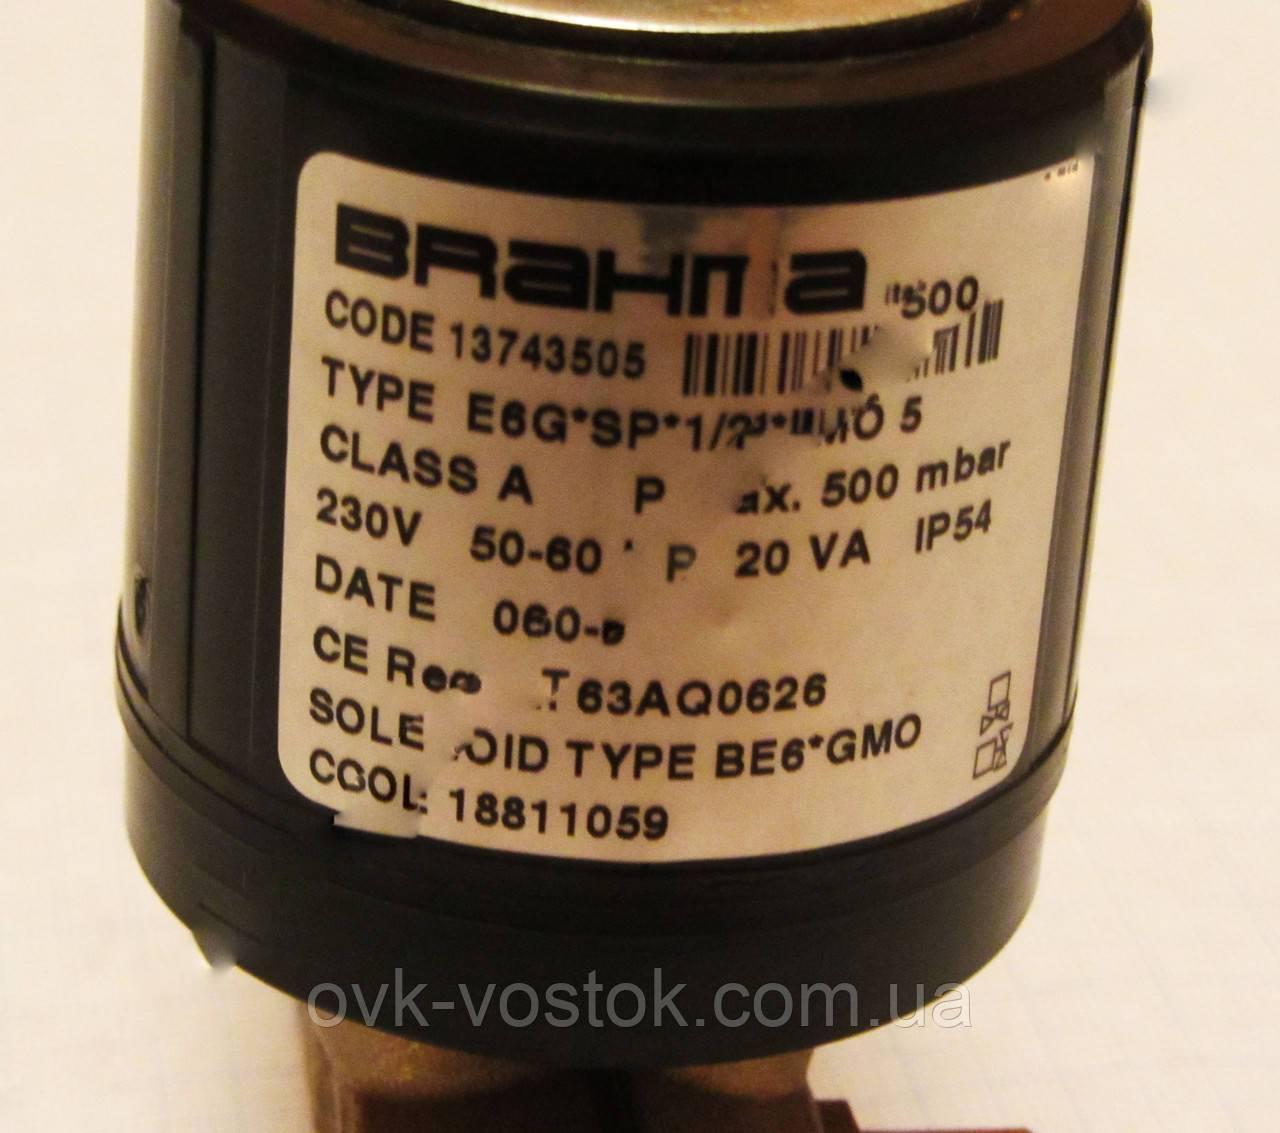 Газові клапани BRAHMA E6G*SP*1/2*GMO 5